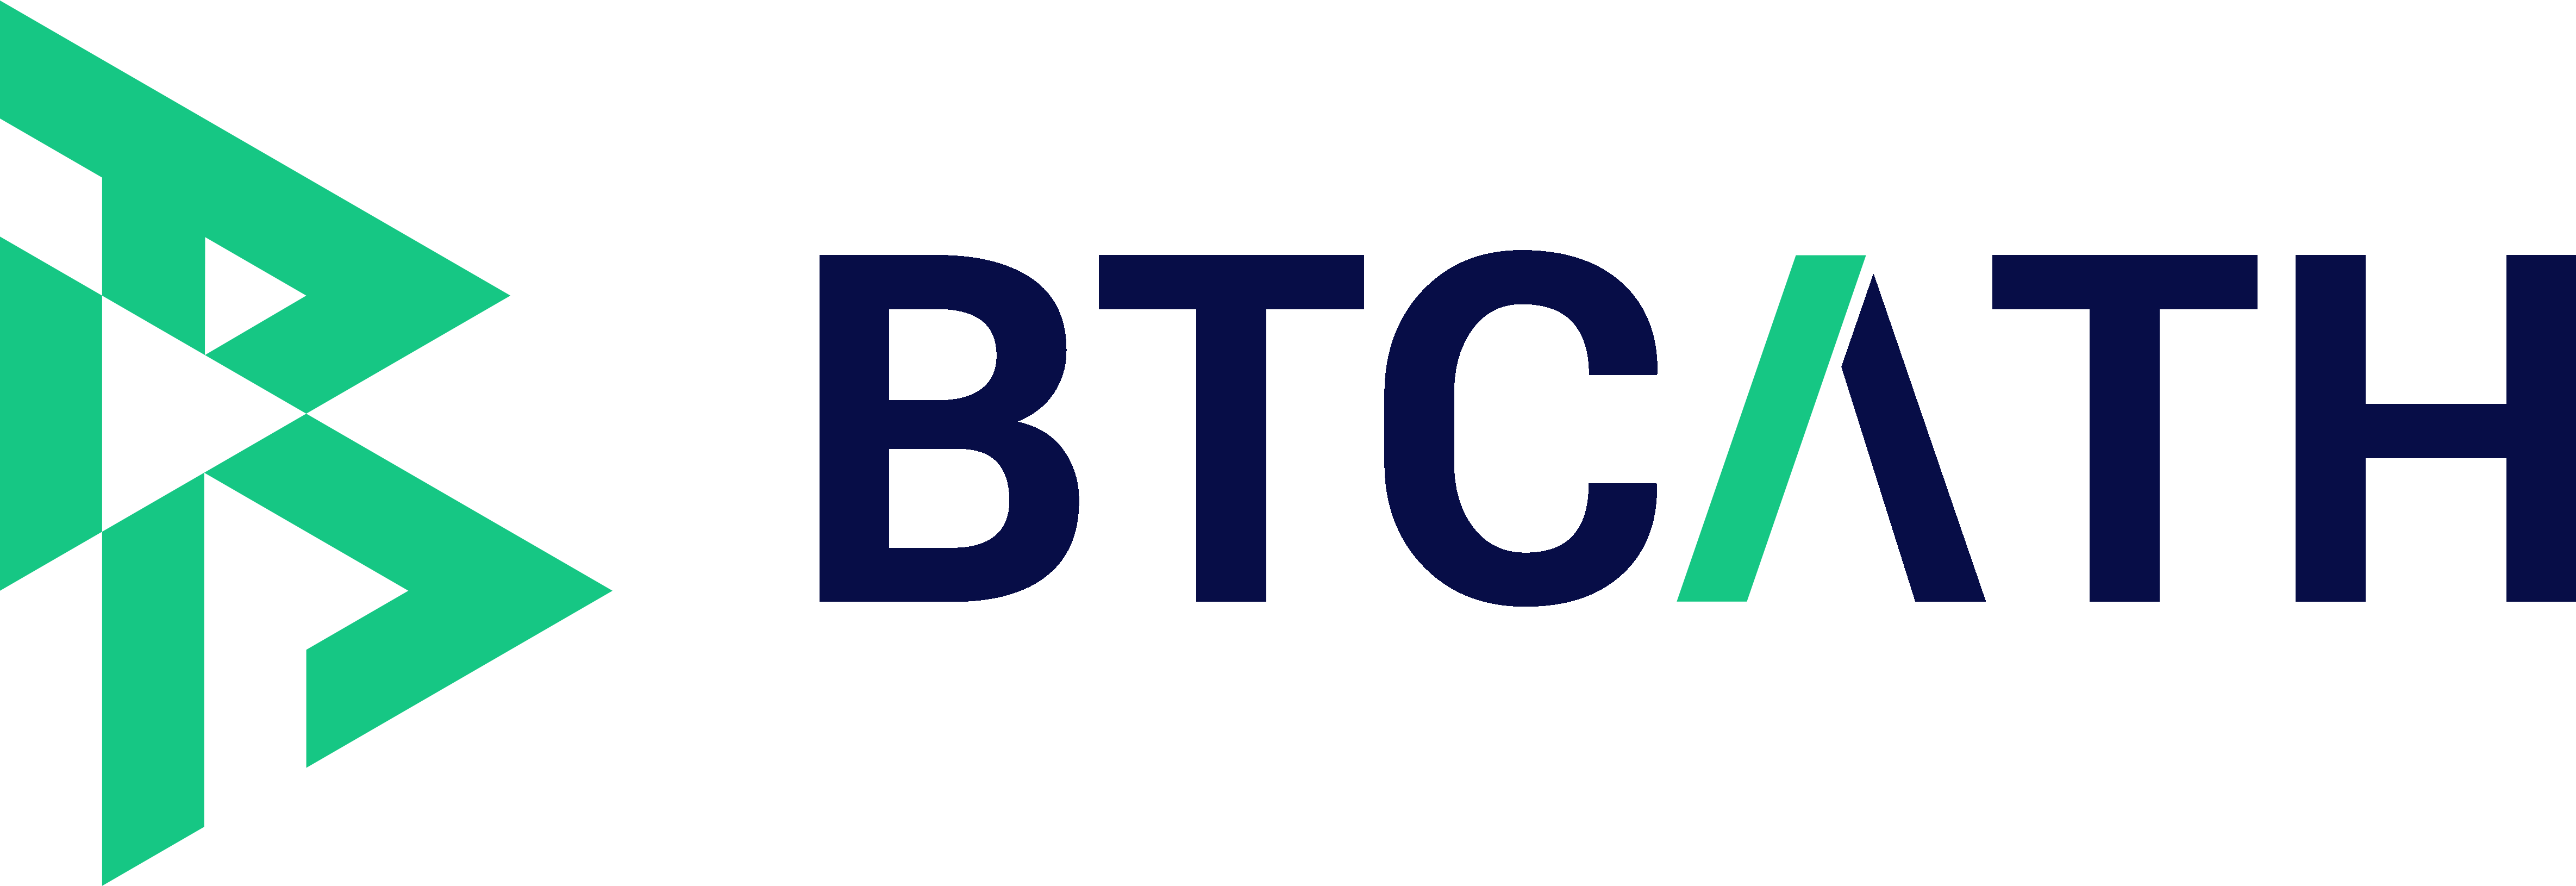 BTCATH Logo, Bitcoin All-Time High (ATH), Cryptocurrency (Crypto) Prices & ATHs